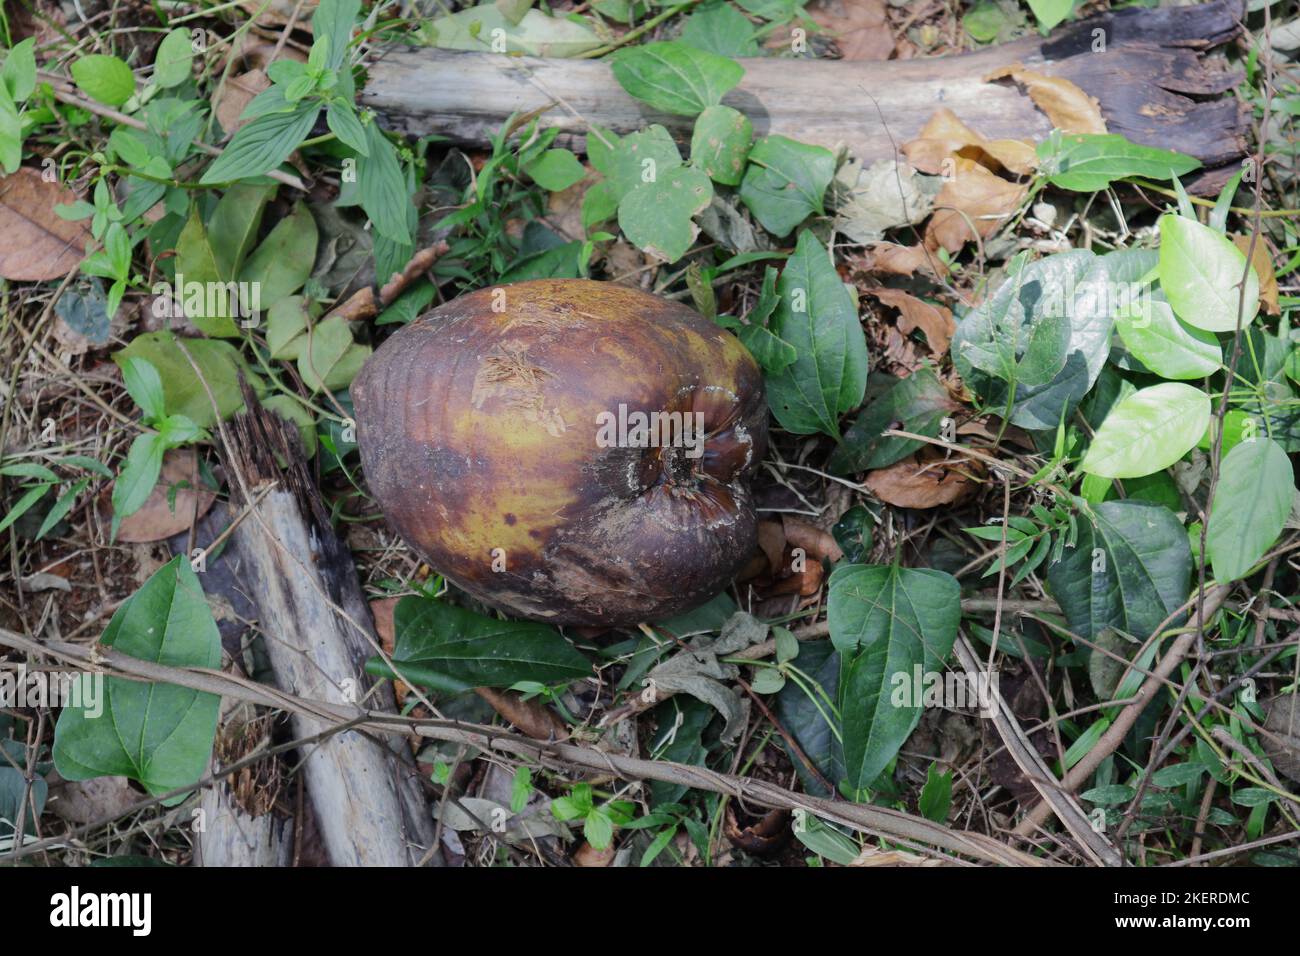 A fully ripened and fallen Coconut (Cocos Nucifera) on grassy wild area Stock Photo